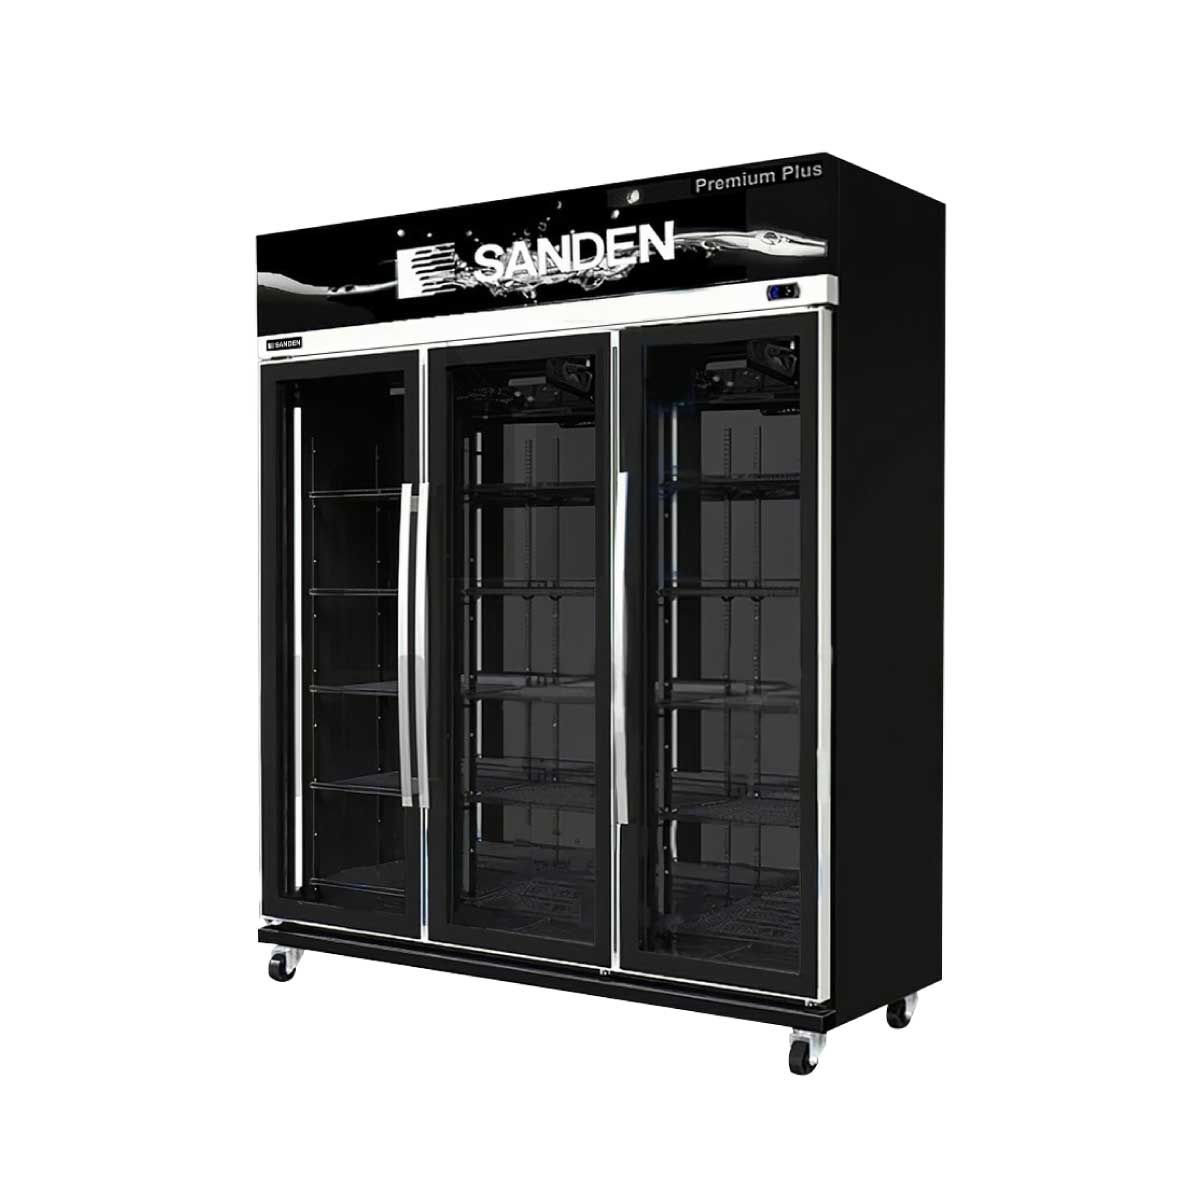 SANDEN ตู้แช่เครื่องดื่ม 3ประตู  Inverter Premium Plus Cooler รุ่น YEM-1605IP